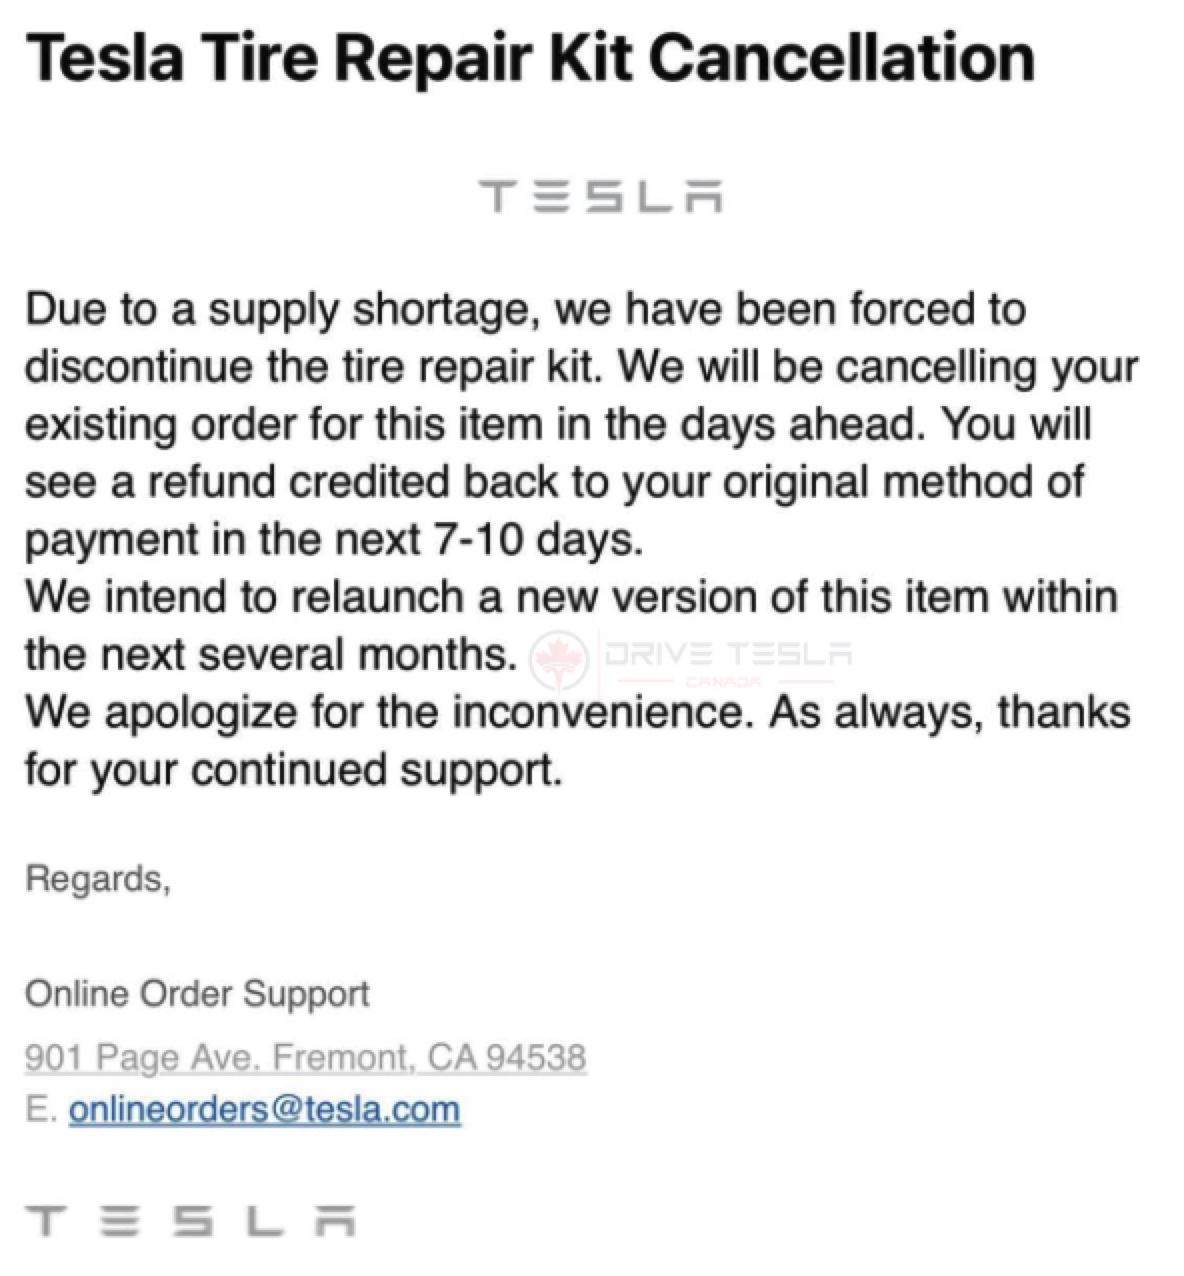 Tire Repair cancellation